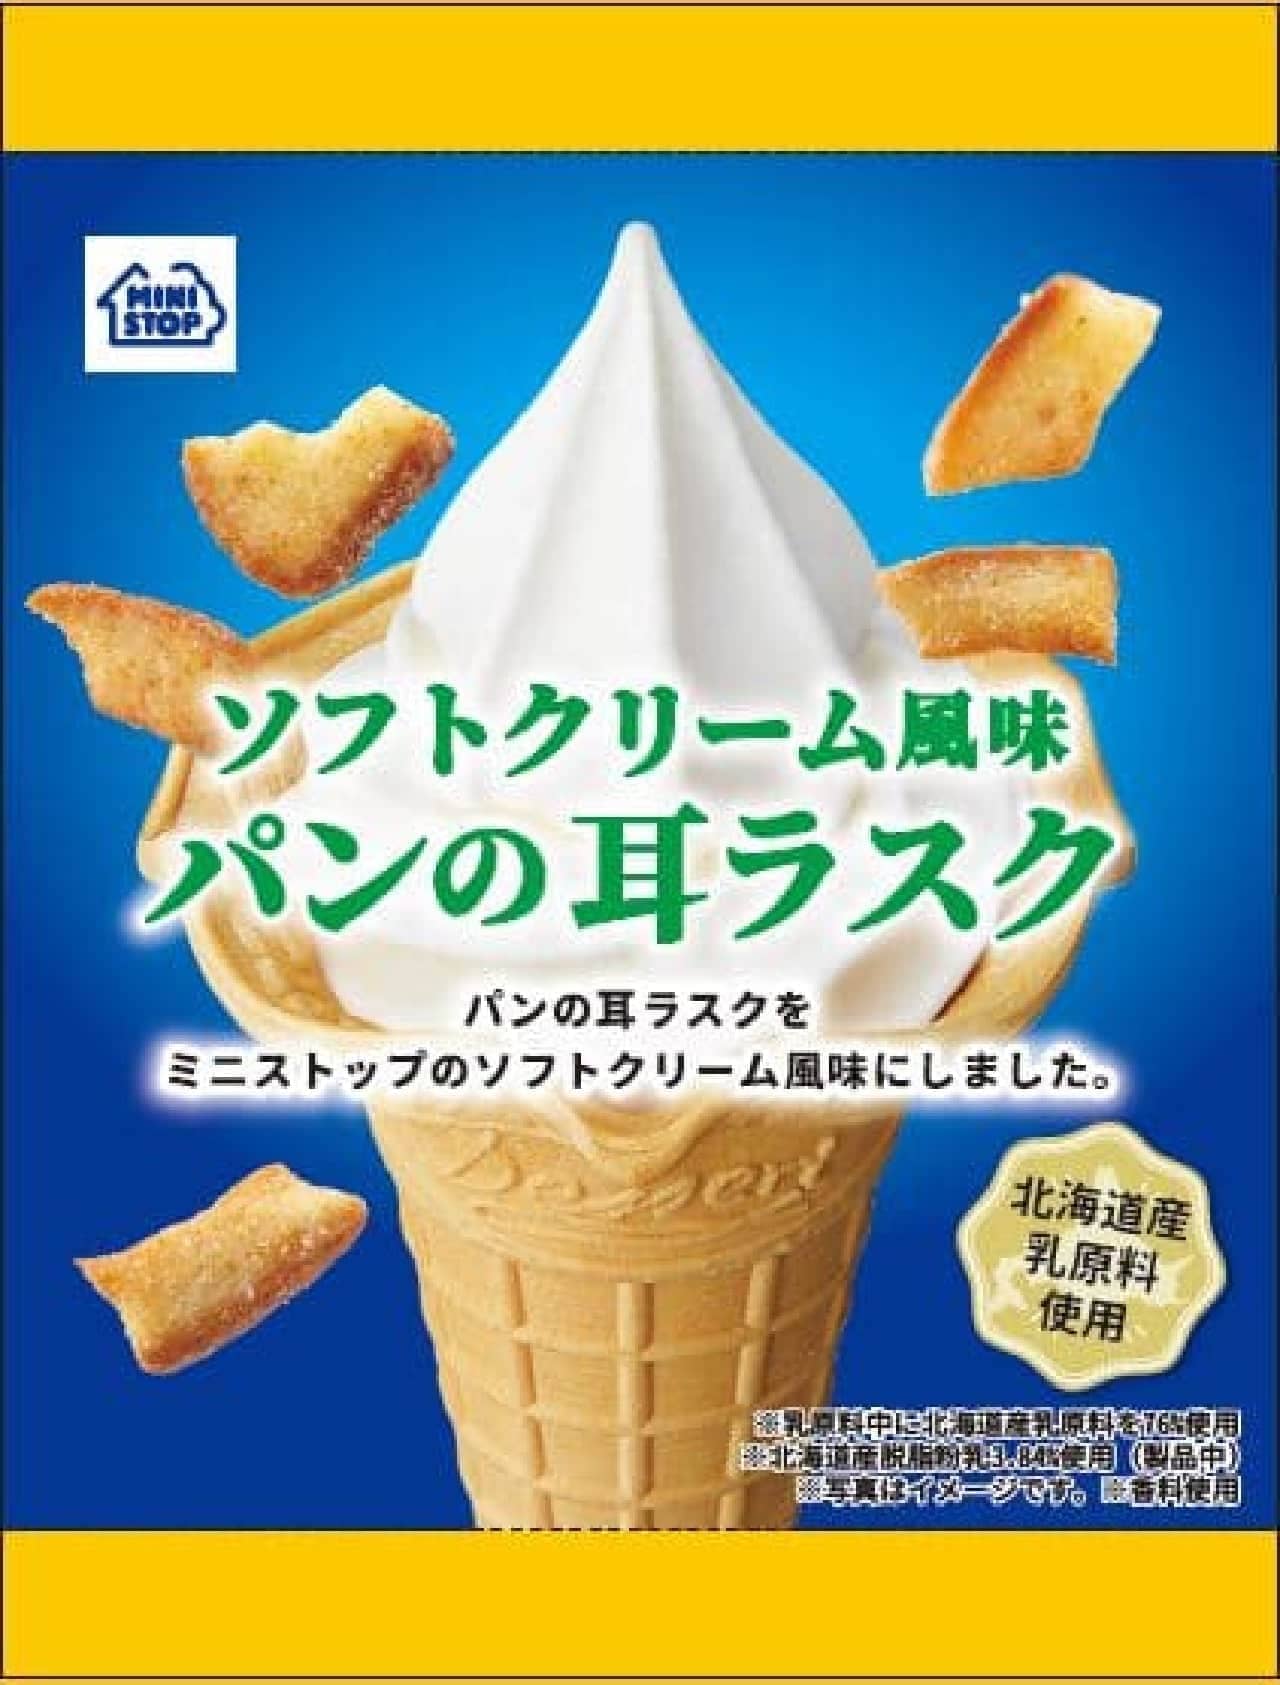 Ministop "Soft serve ice cream flavored bread ear rusks"